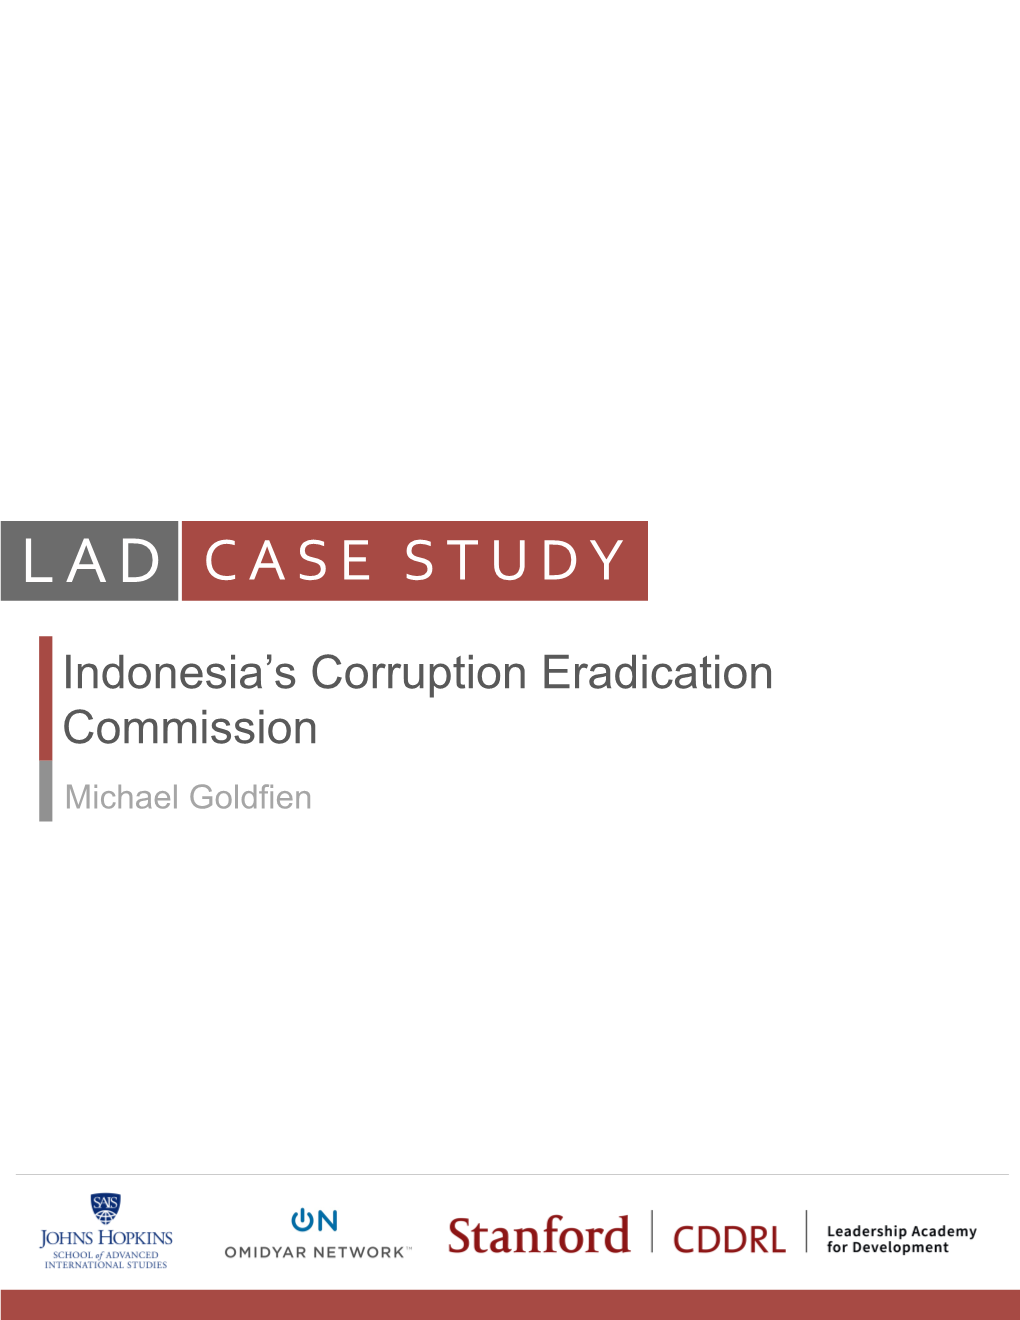 Indonesia's Corruption Eradication Commission